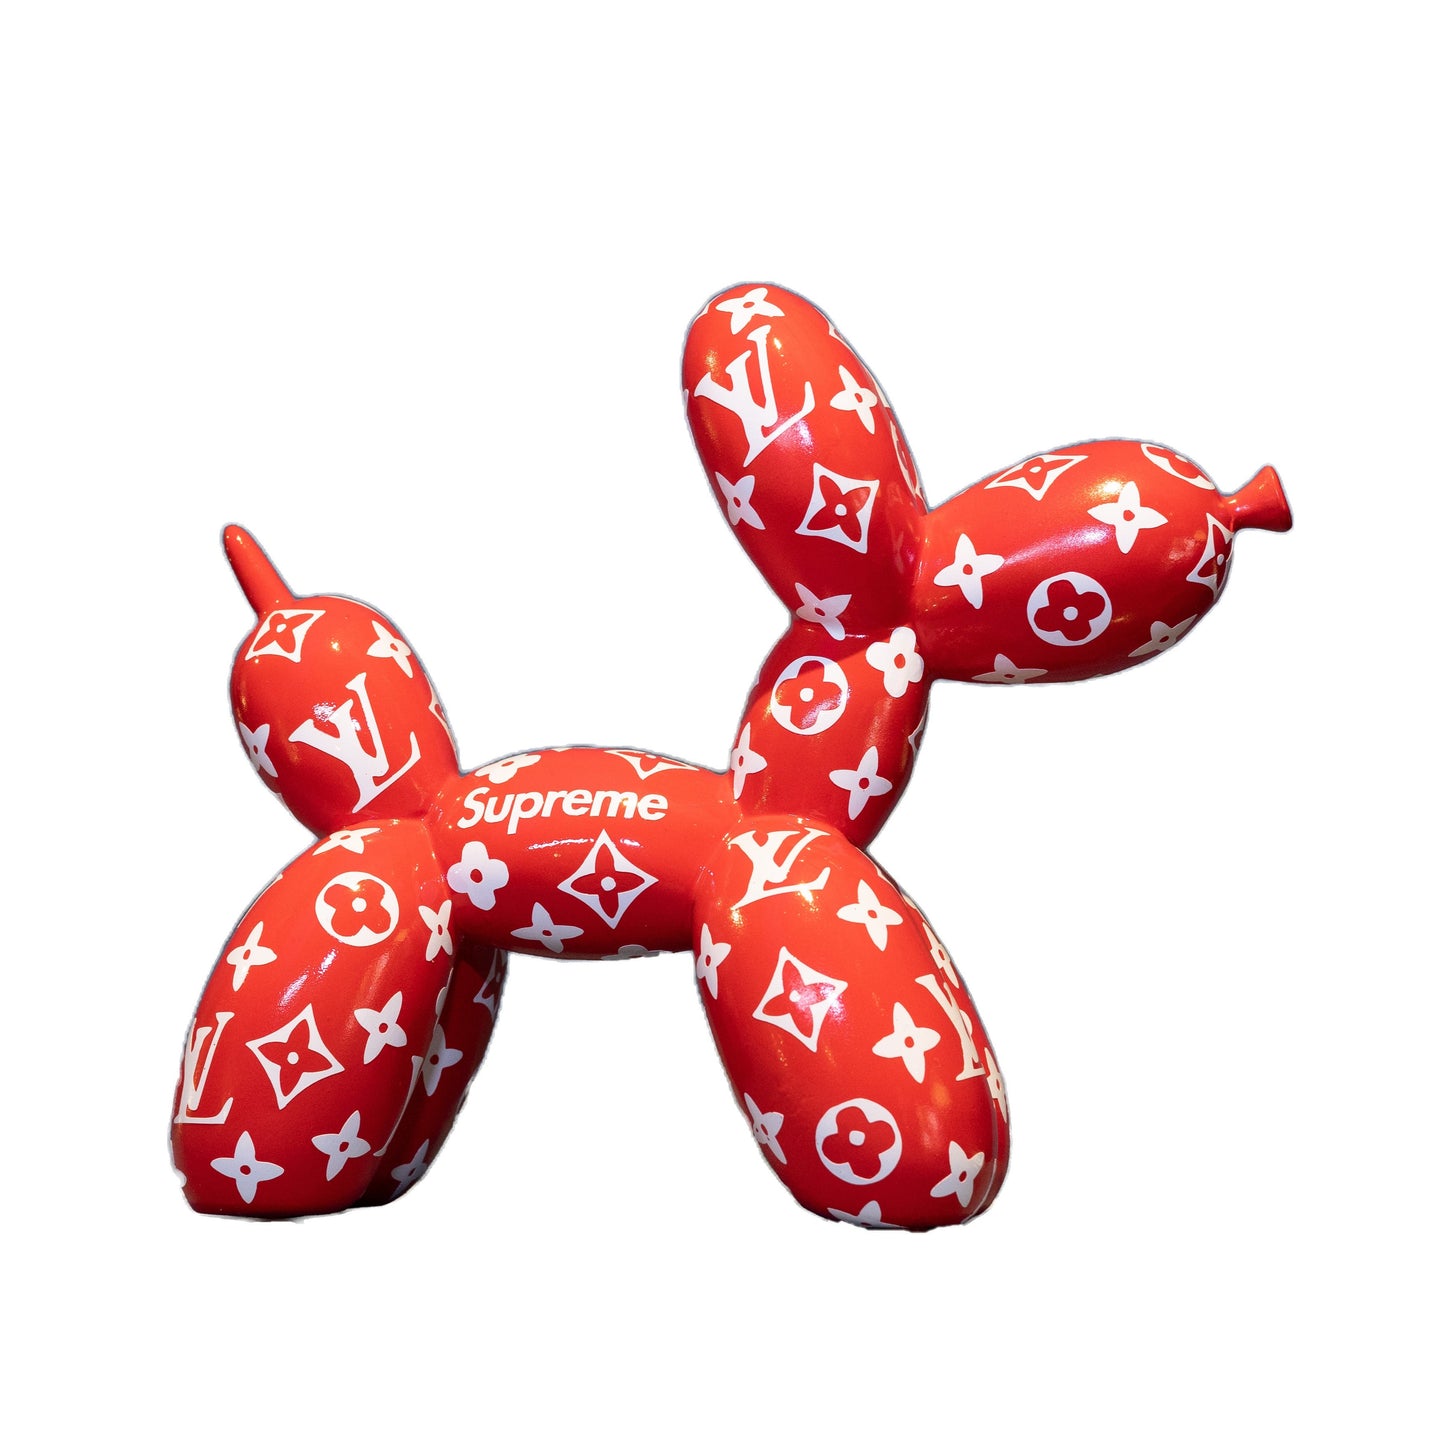 Balloon Dog Louis Vuitton & Supreme